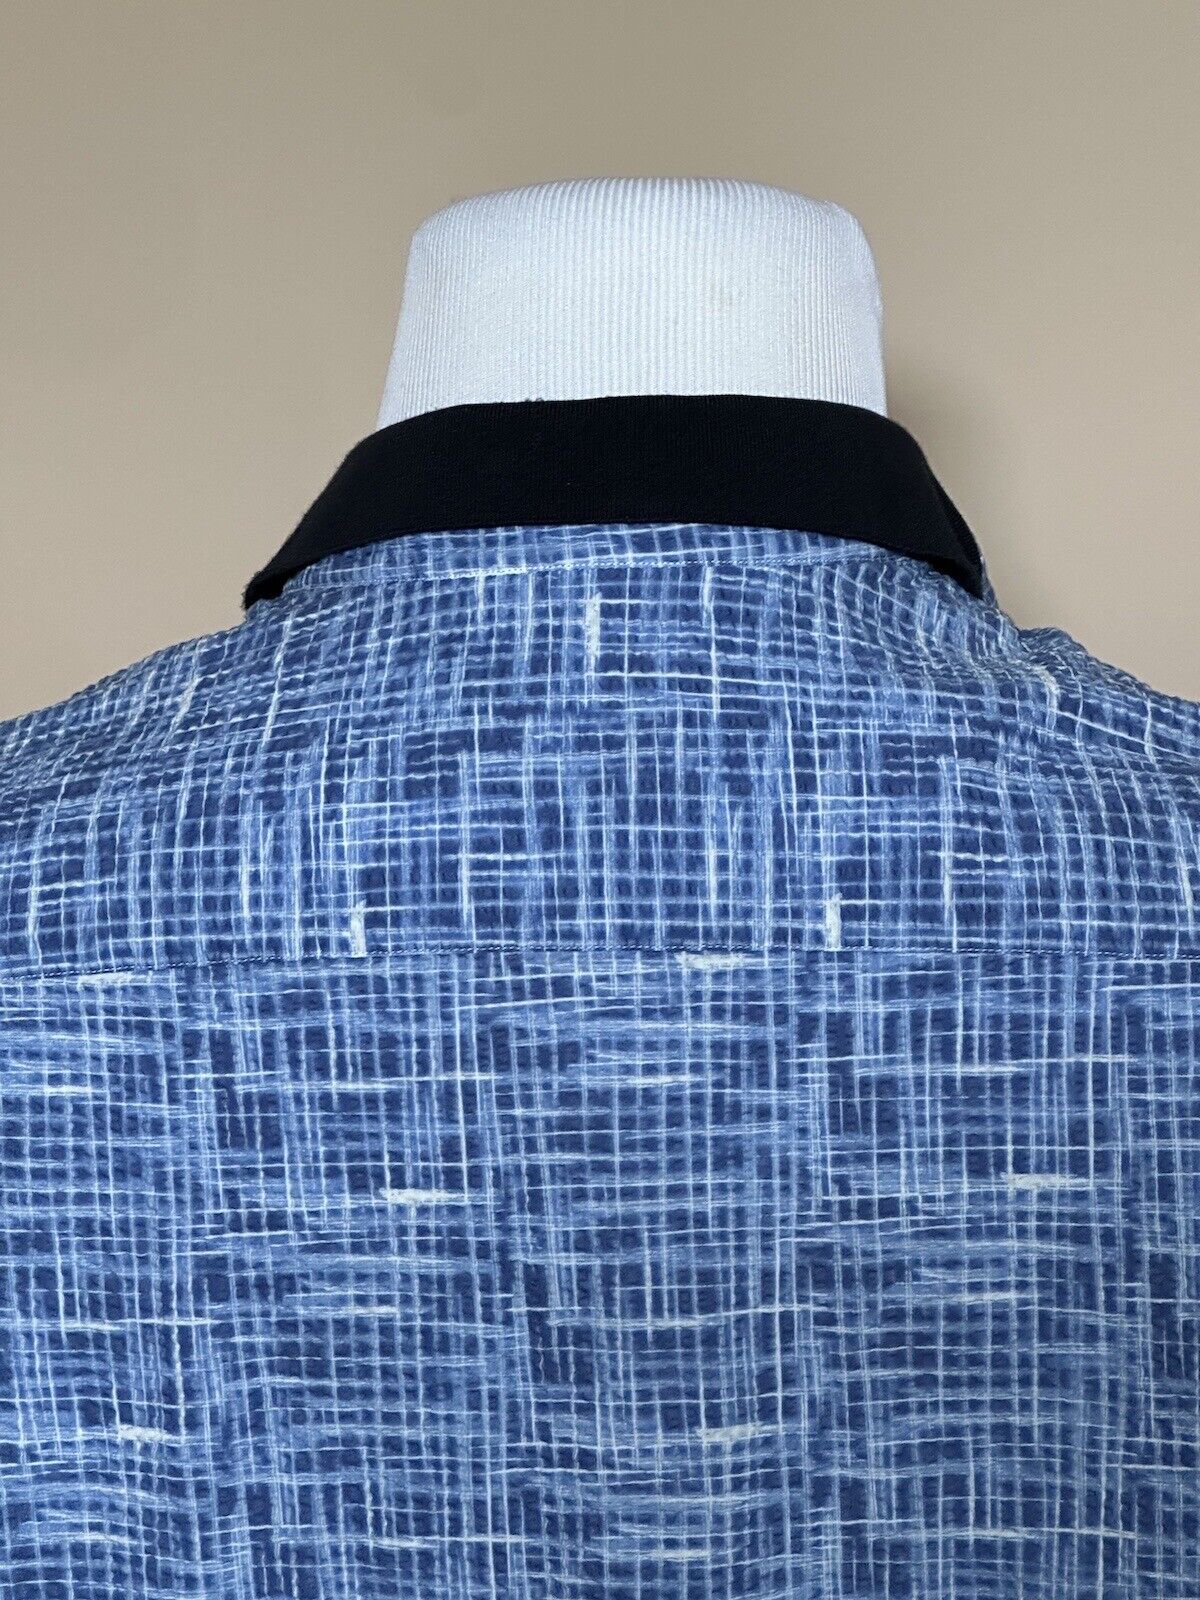 Giorgio Armani Men's Cotton Dress Shirt 42/16.5  Made in Italy